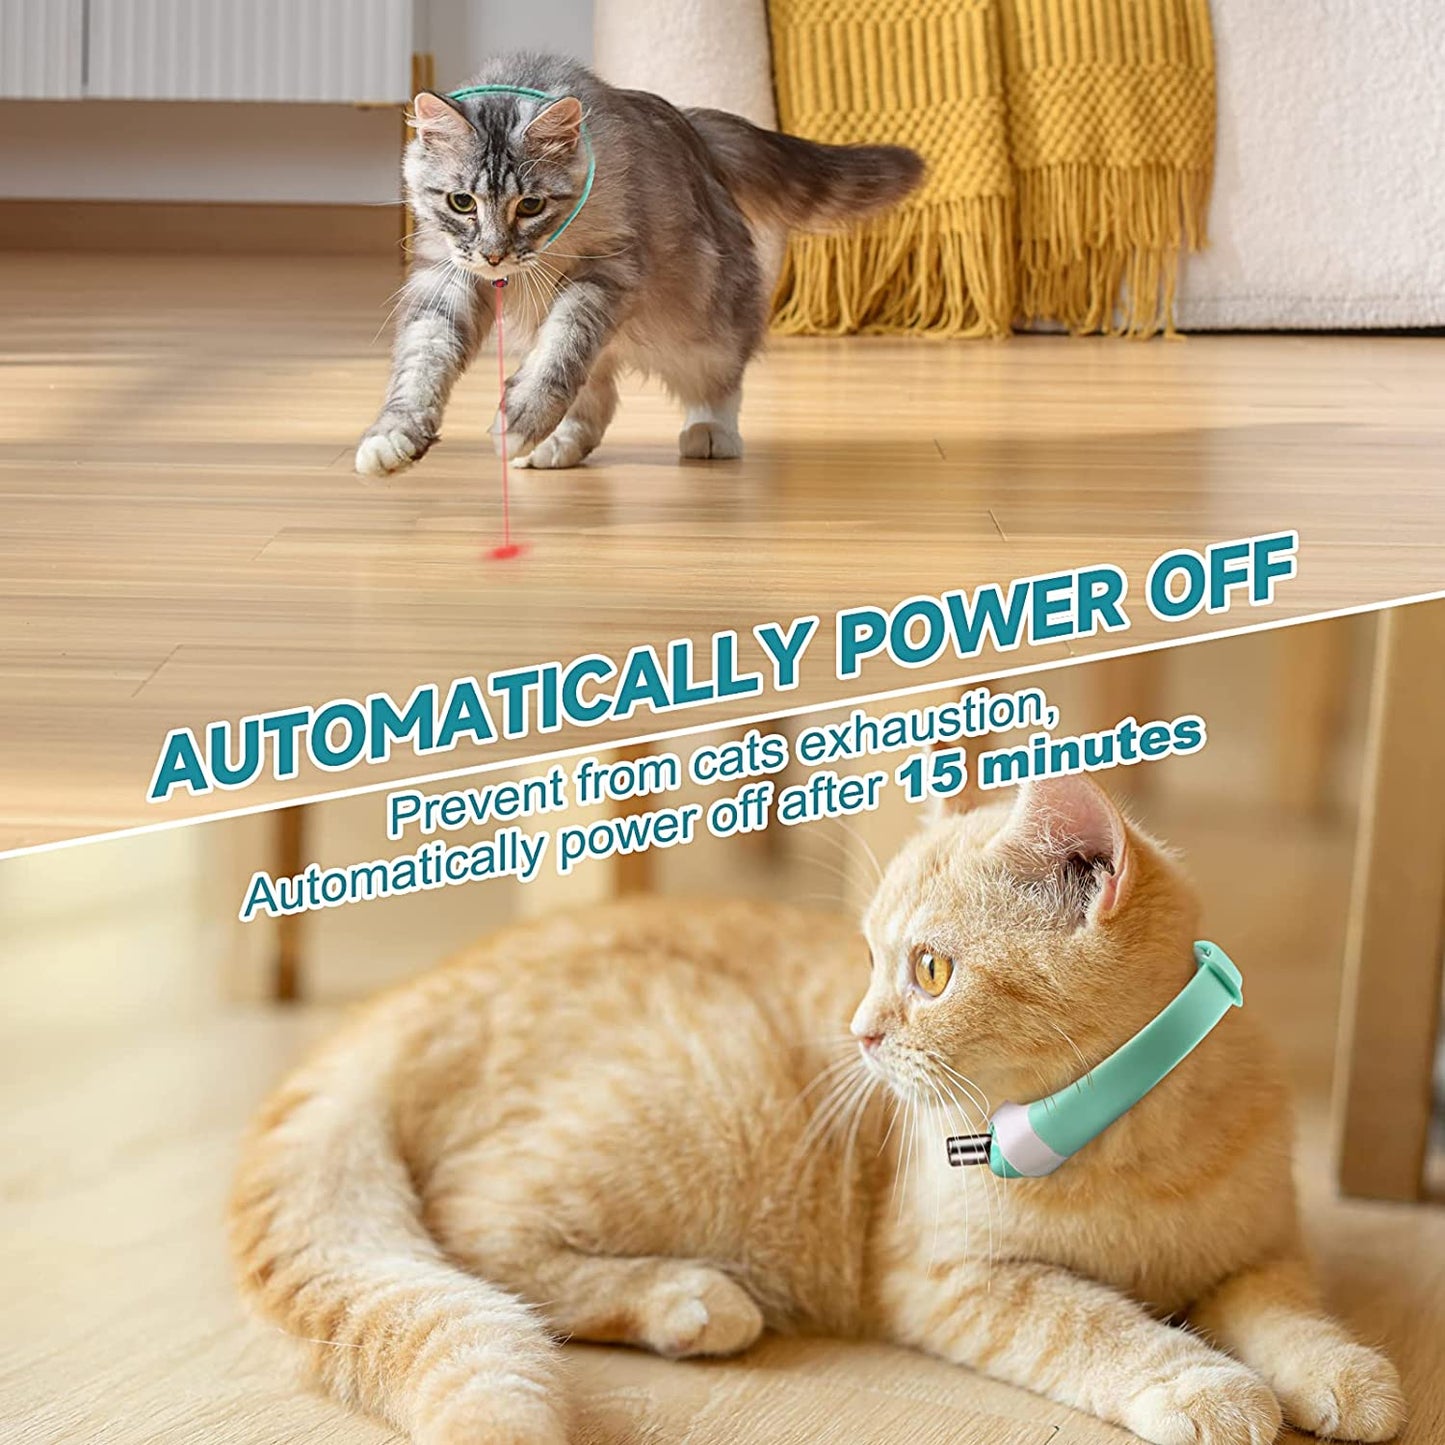 Electric Smart Amusing Collar For Kitten - PETGS